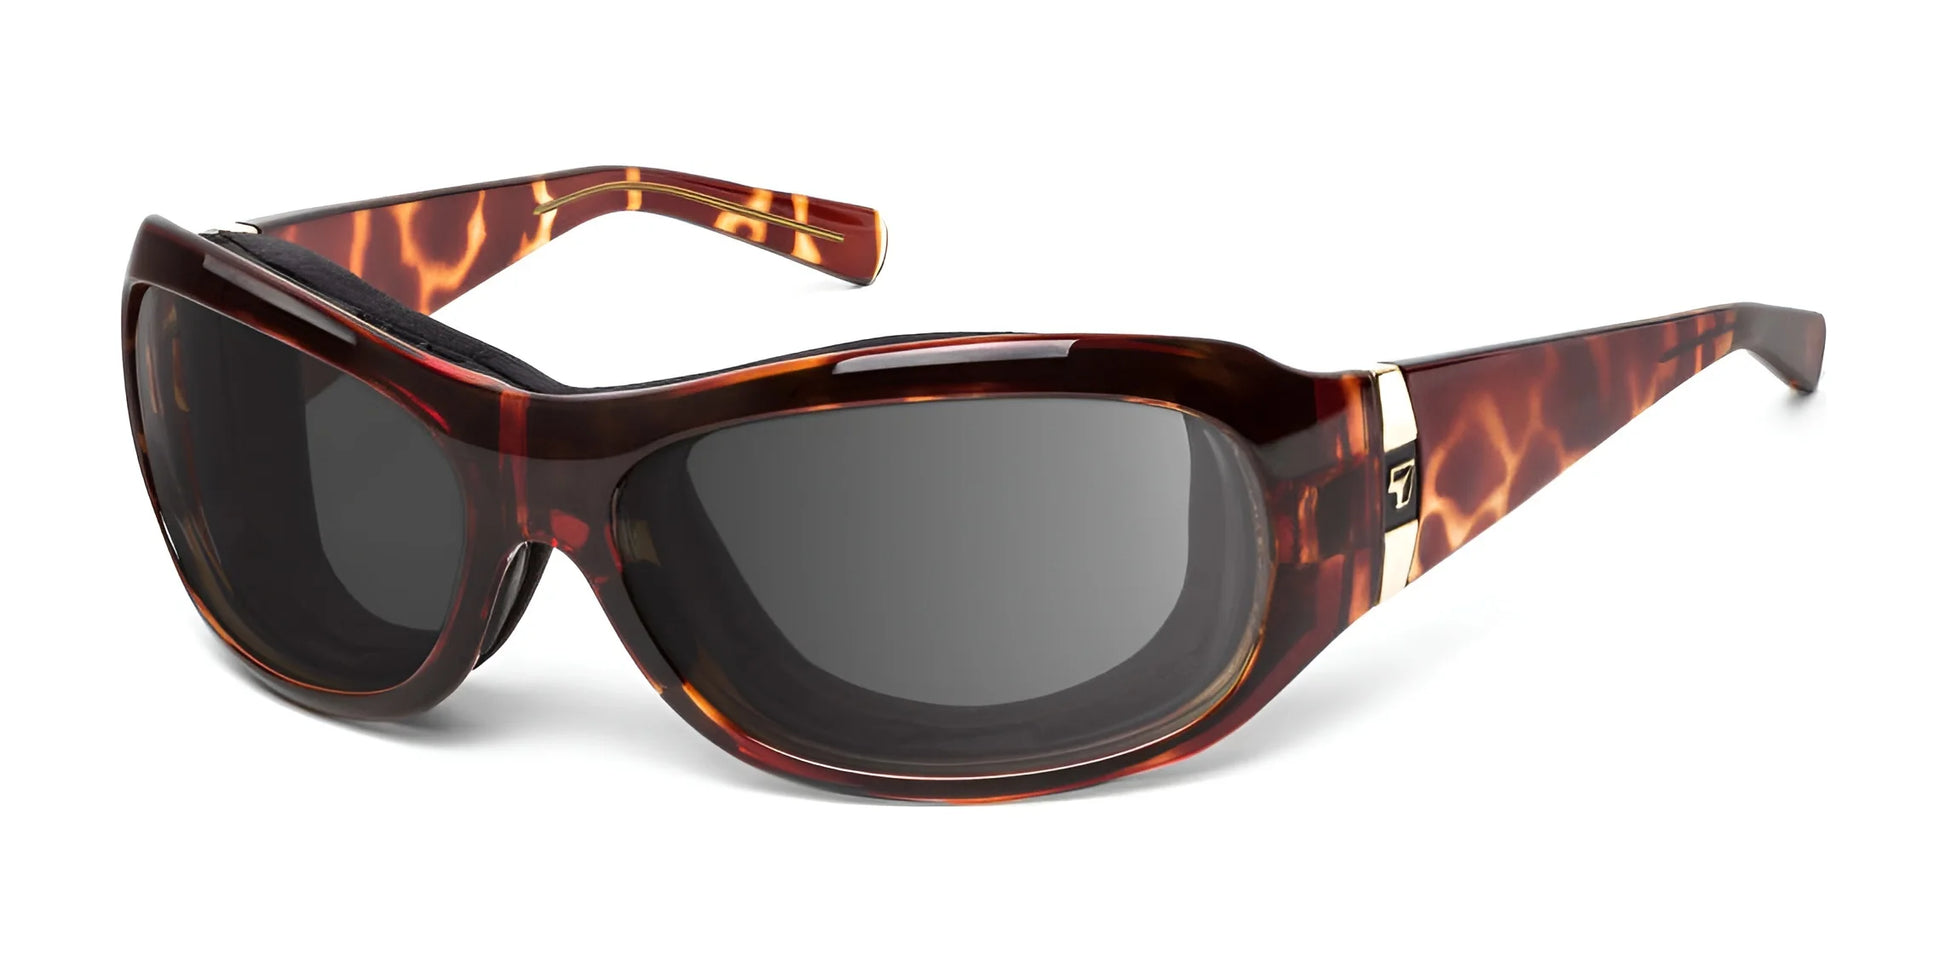 7eye Sedona Sunglasses Light Tortoise / DARKshift Photochromic - Clr to DARK Gray